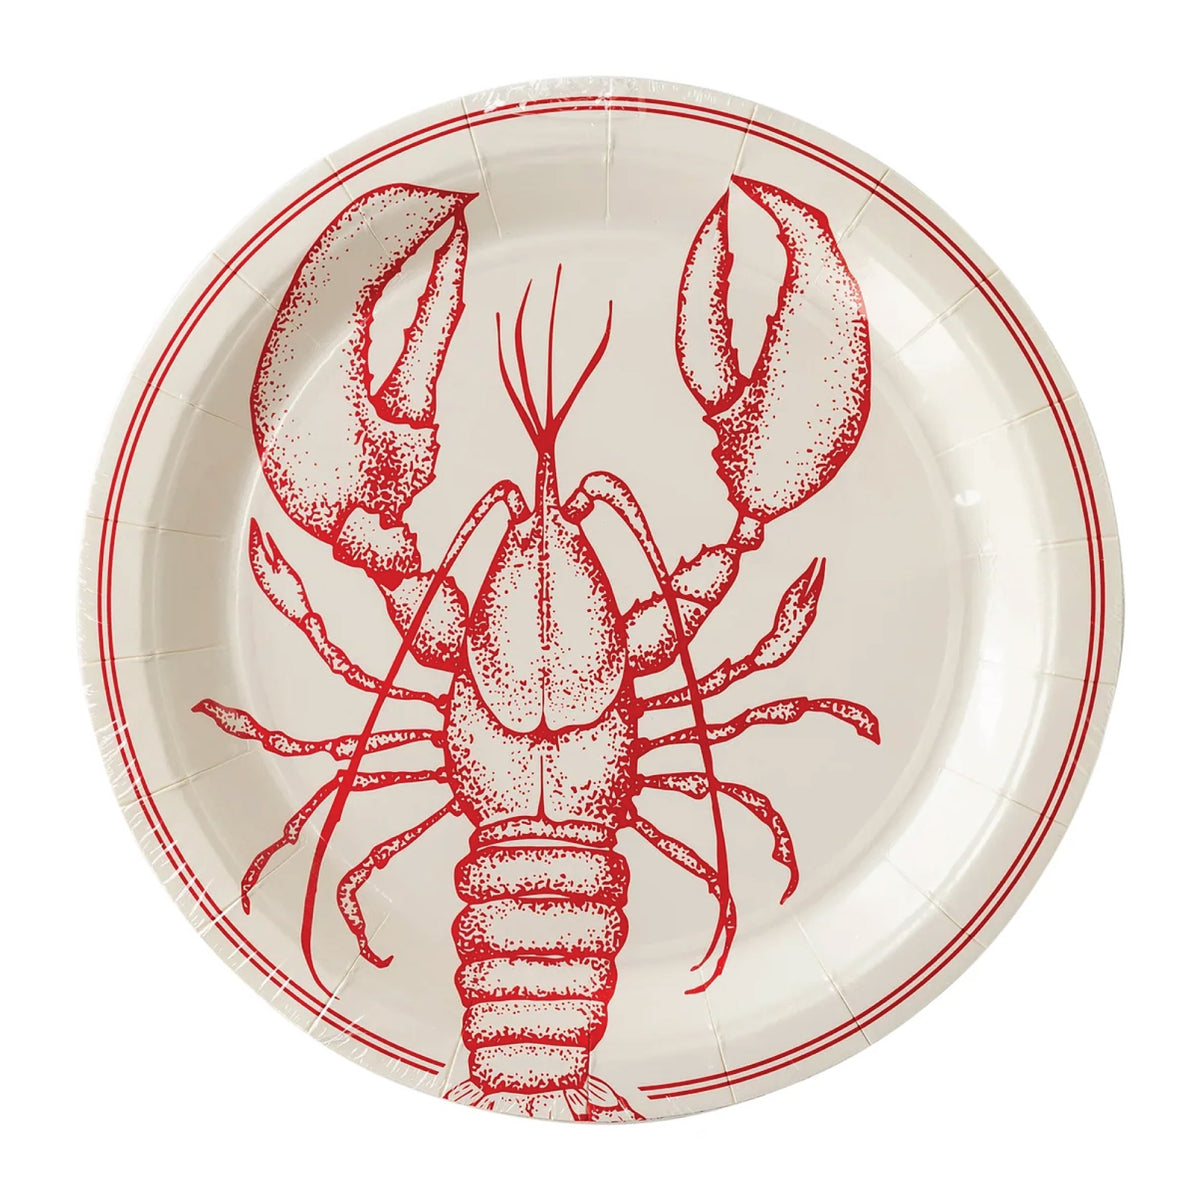 APOWBLS Crawfish Boil Party Supplies - Lobster Theme Plates & Napkins Party  Supplies, Plate, Cup, Napkin, Crayfish Crab Seafood Shrimp Boil Theme